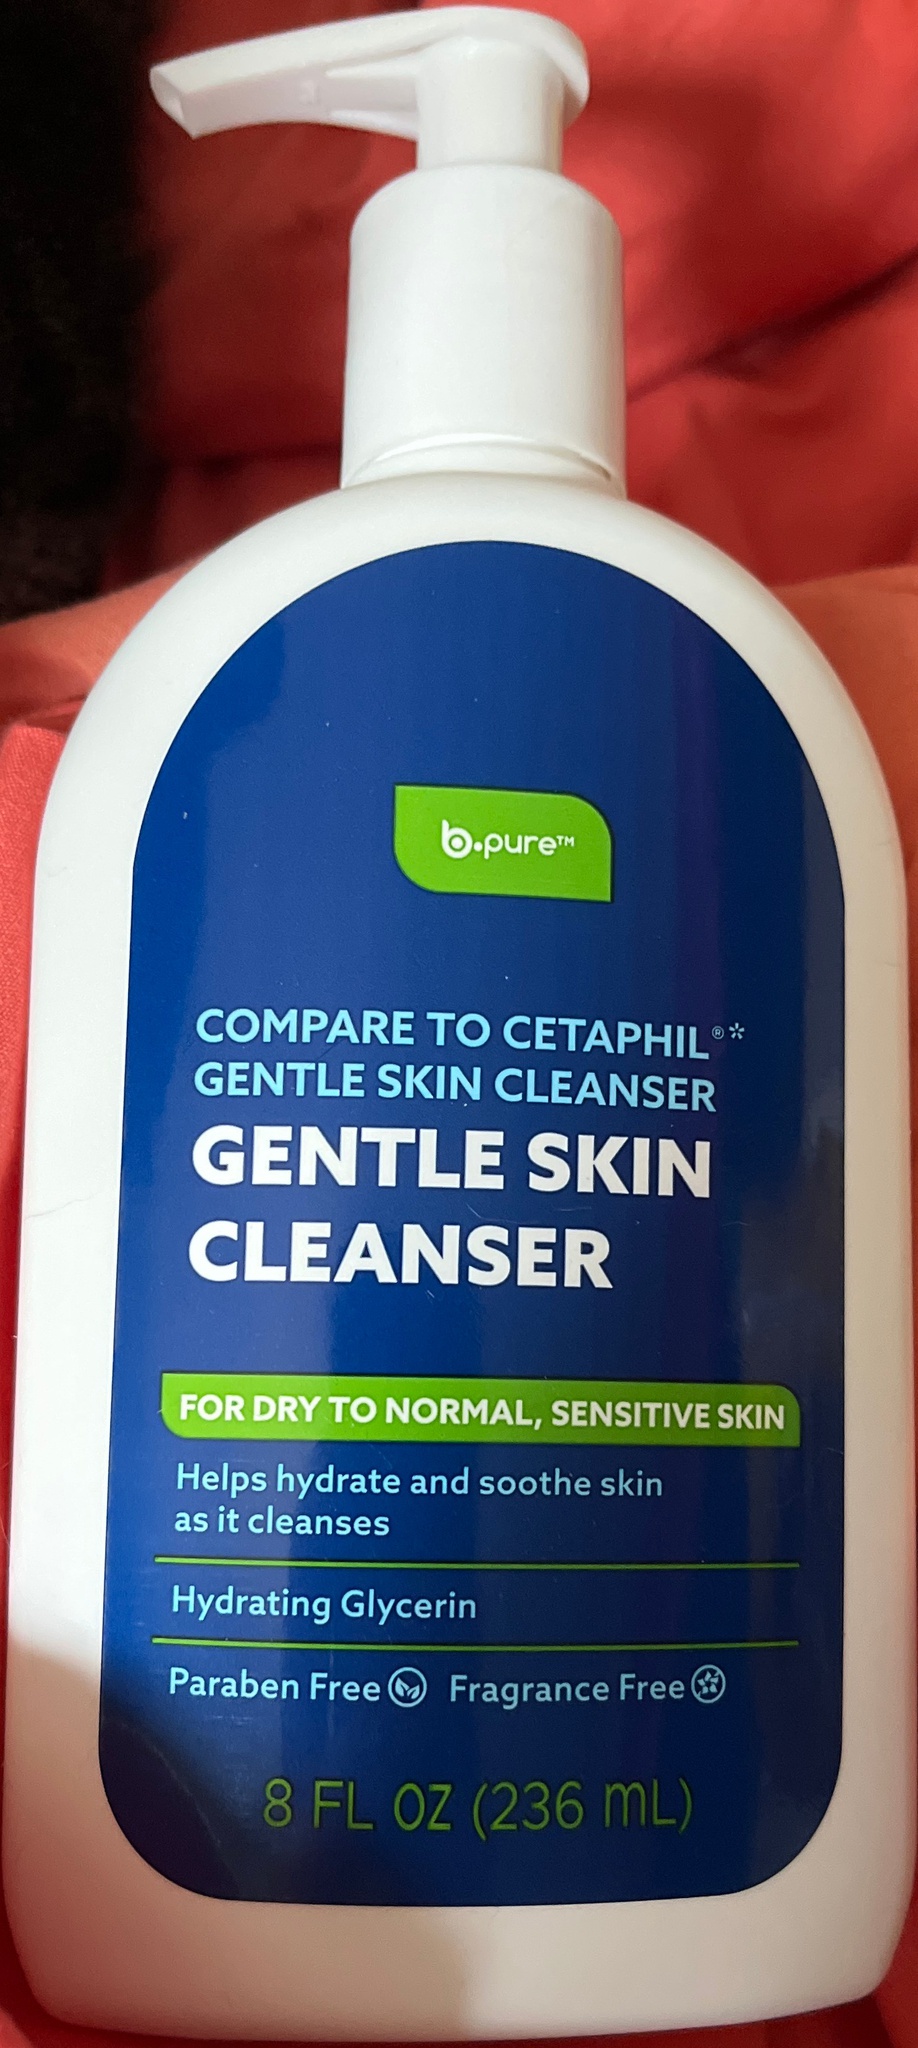 b-pure Gentle Skin Cleanser